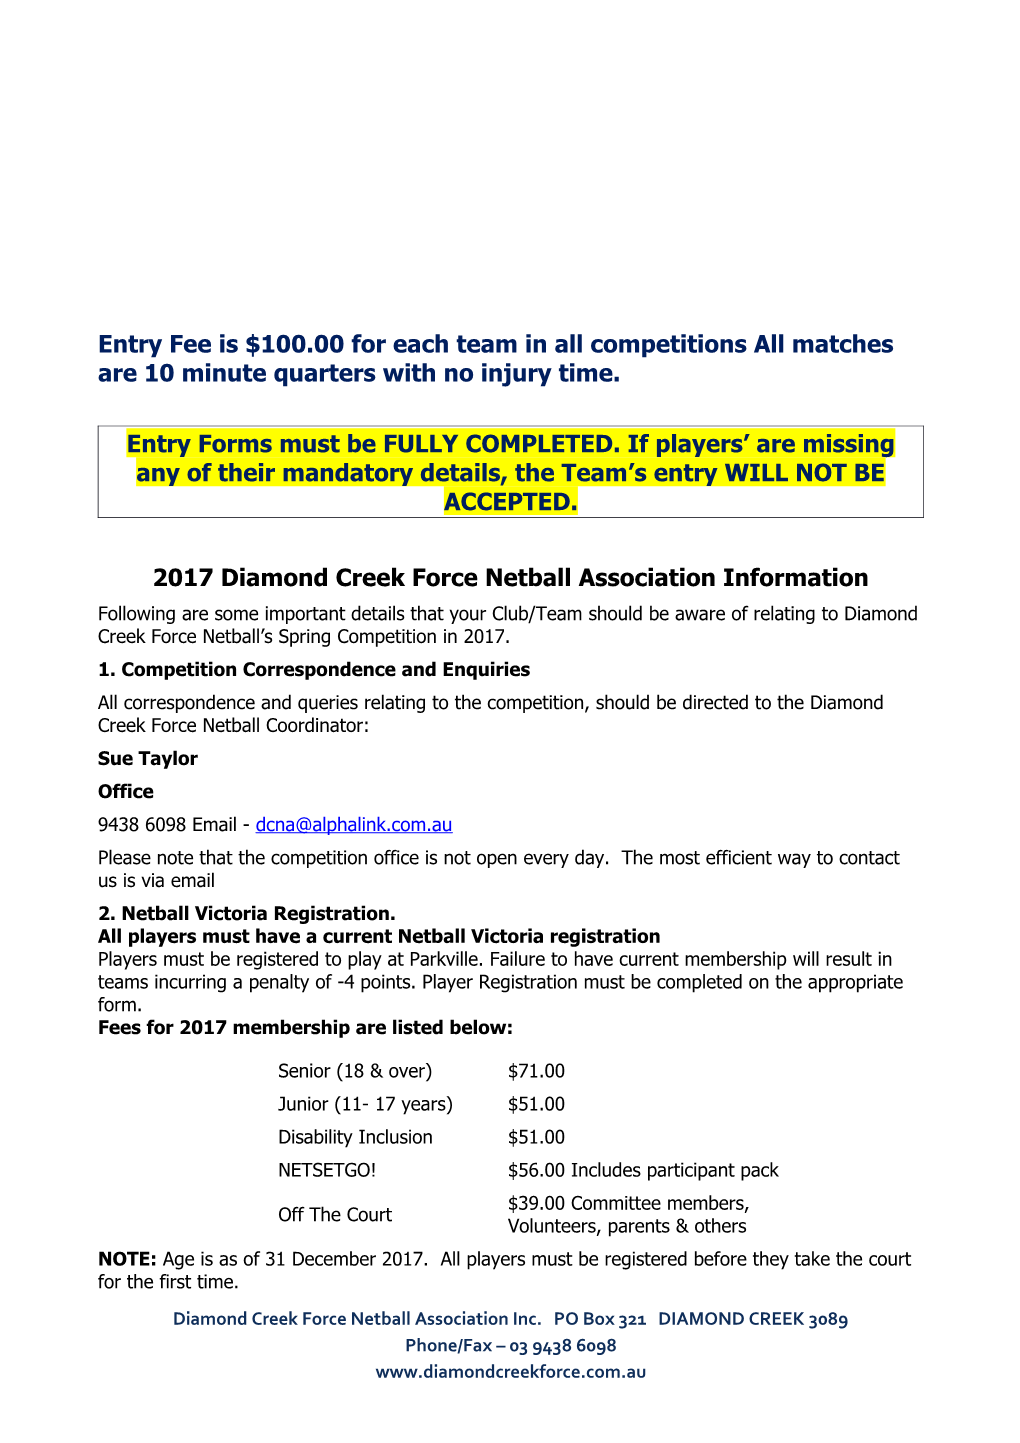 2017 Diamond Creek Force Netball Association Information